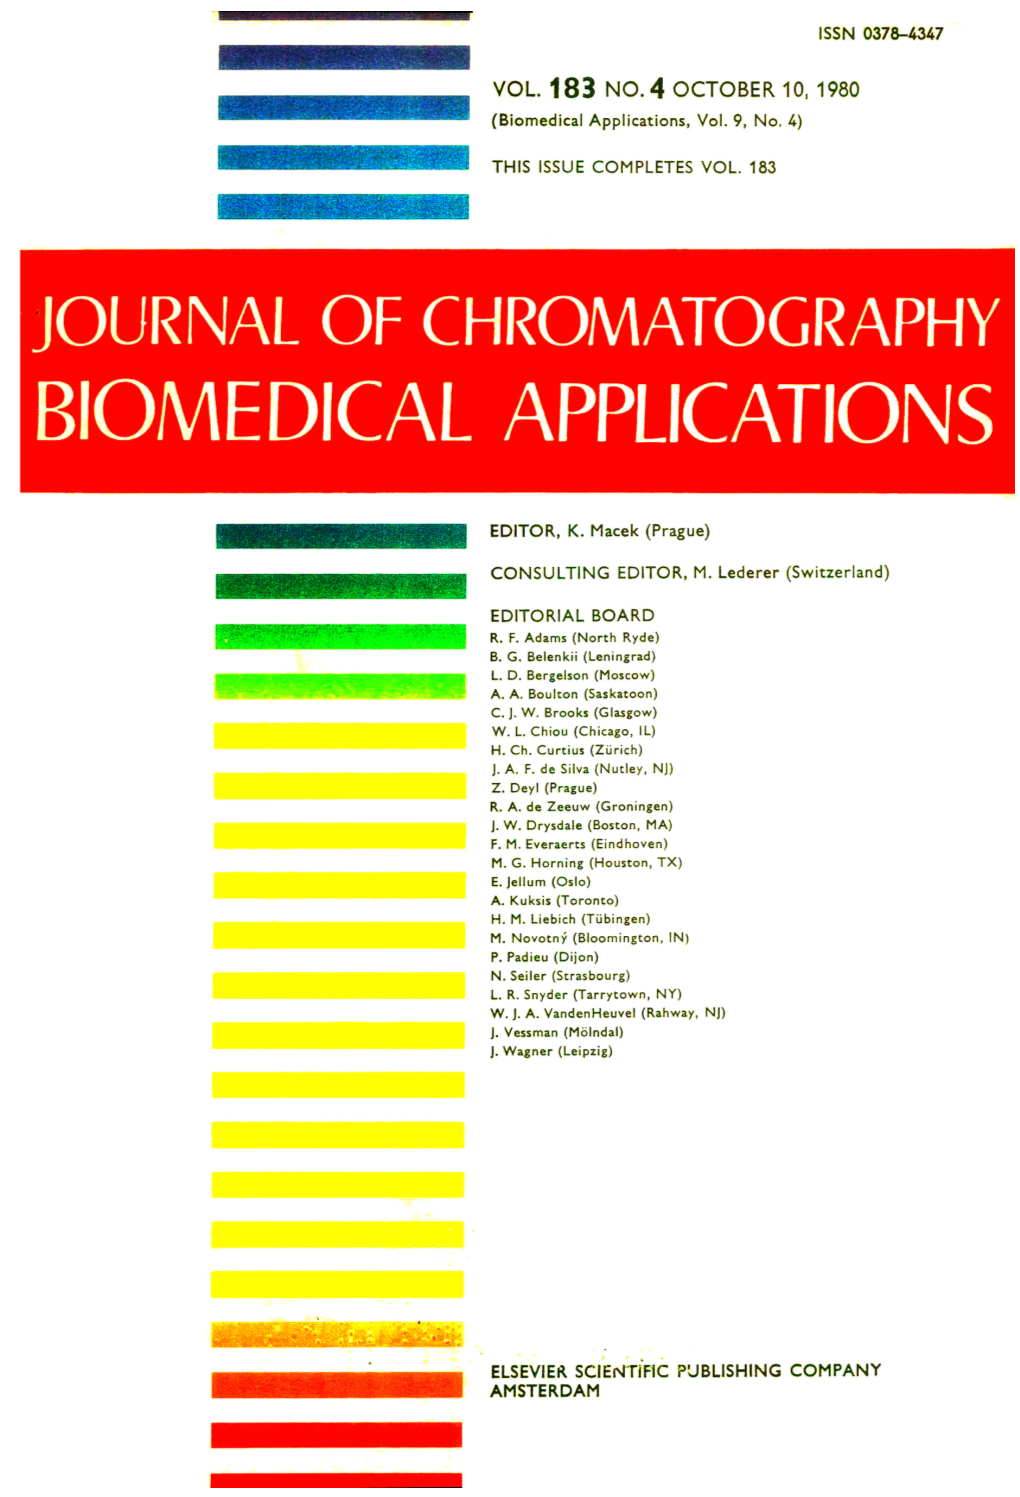 J.Of Chromatography 1980 Vol.183 No.4